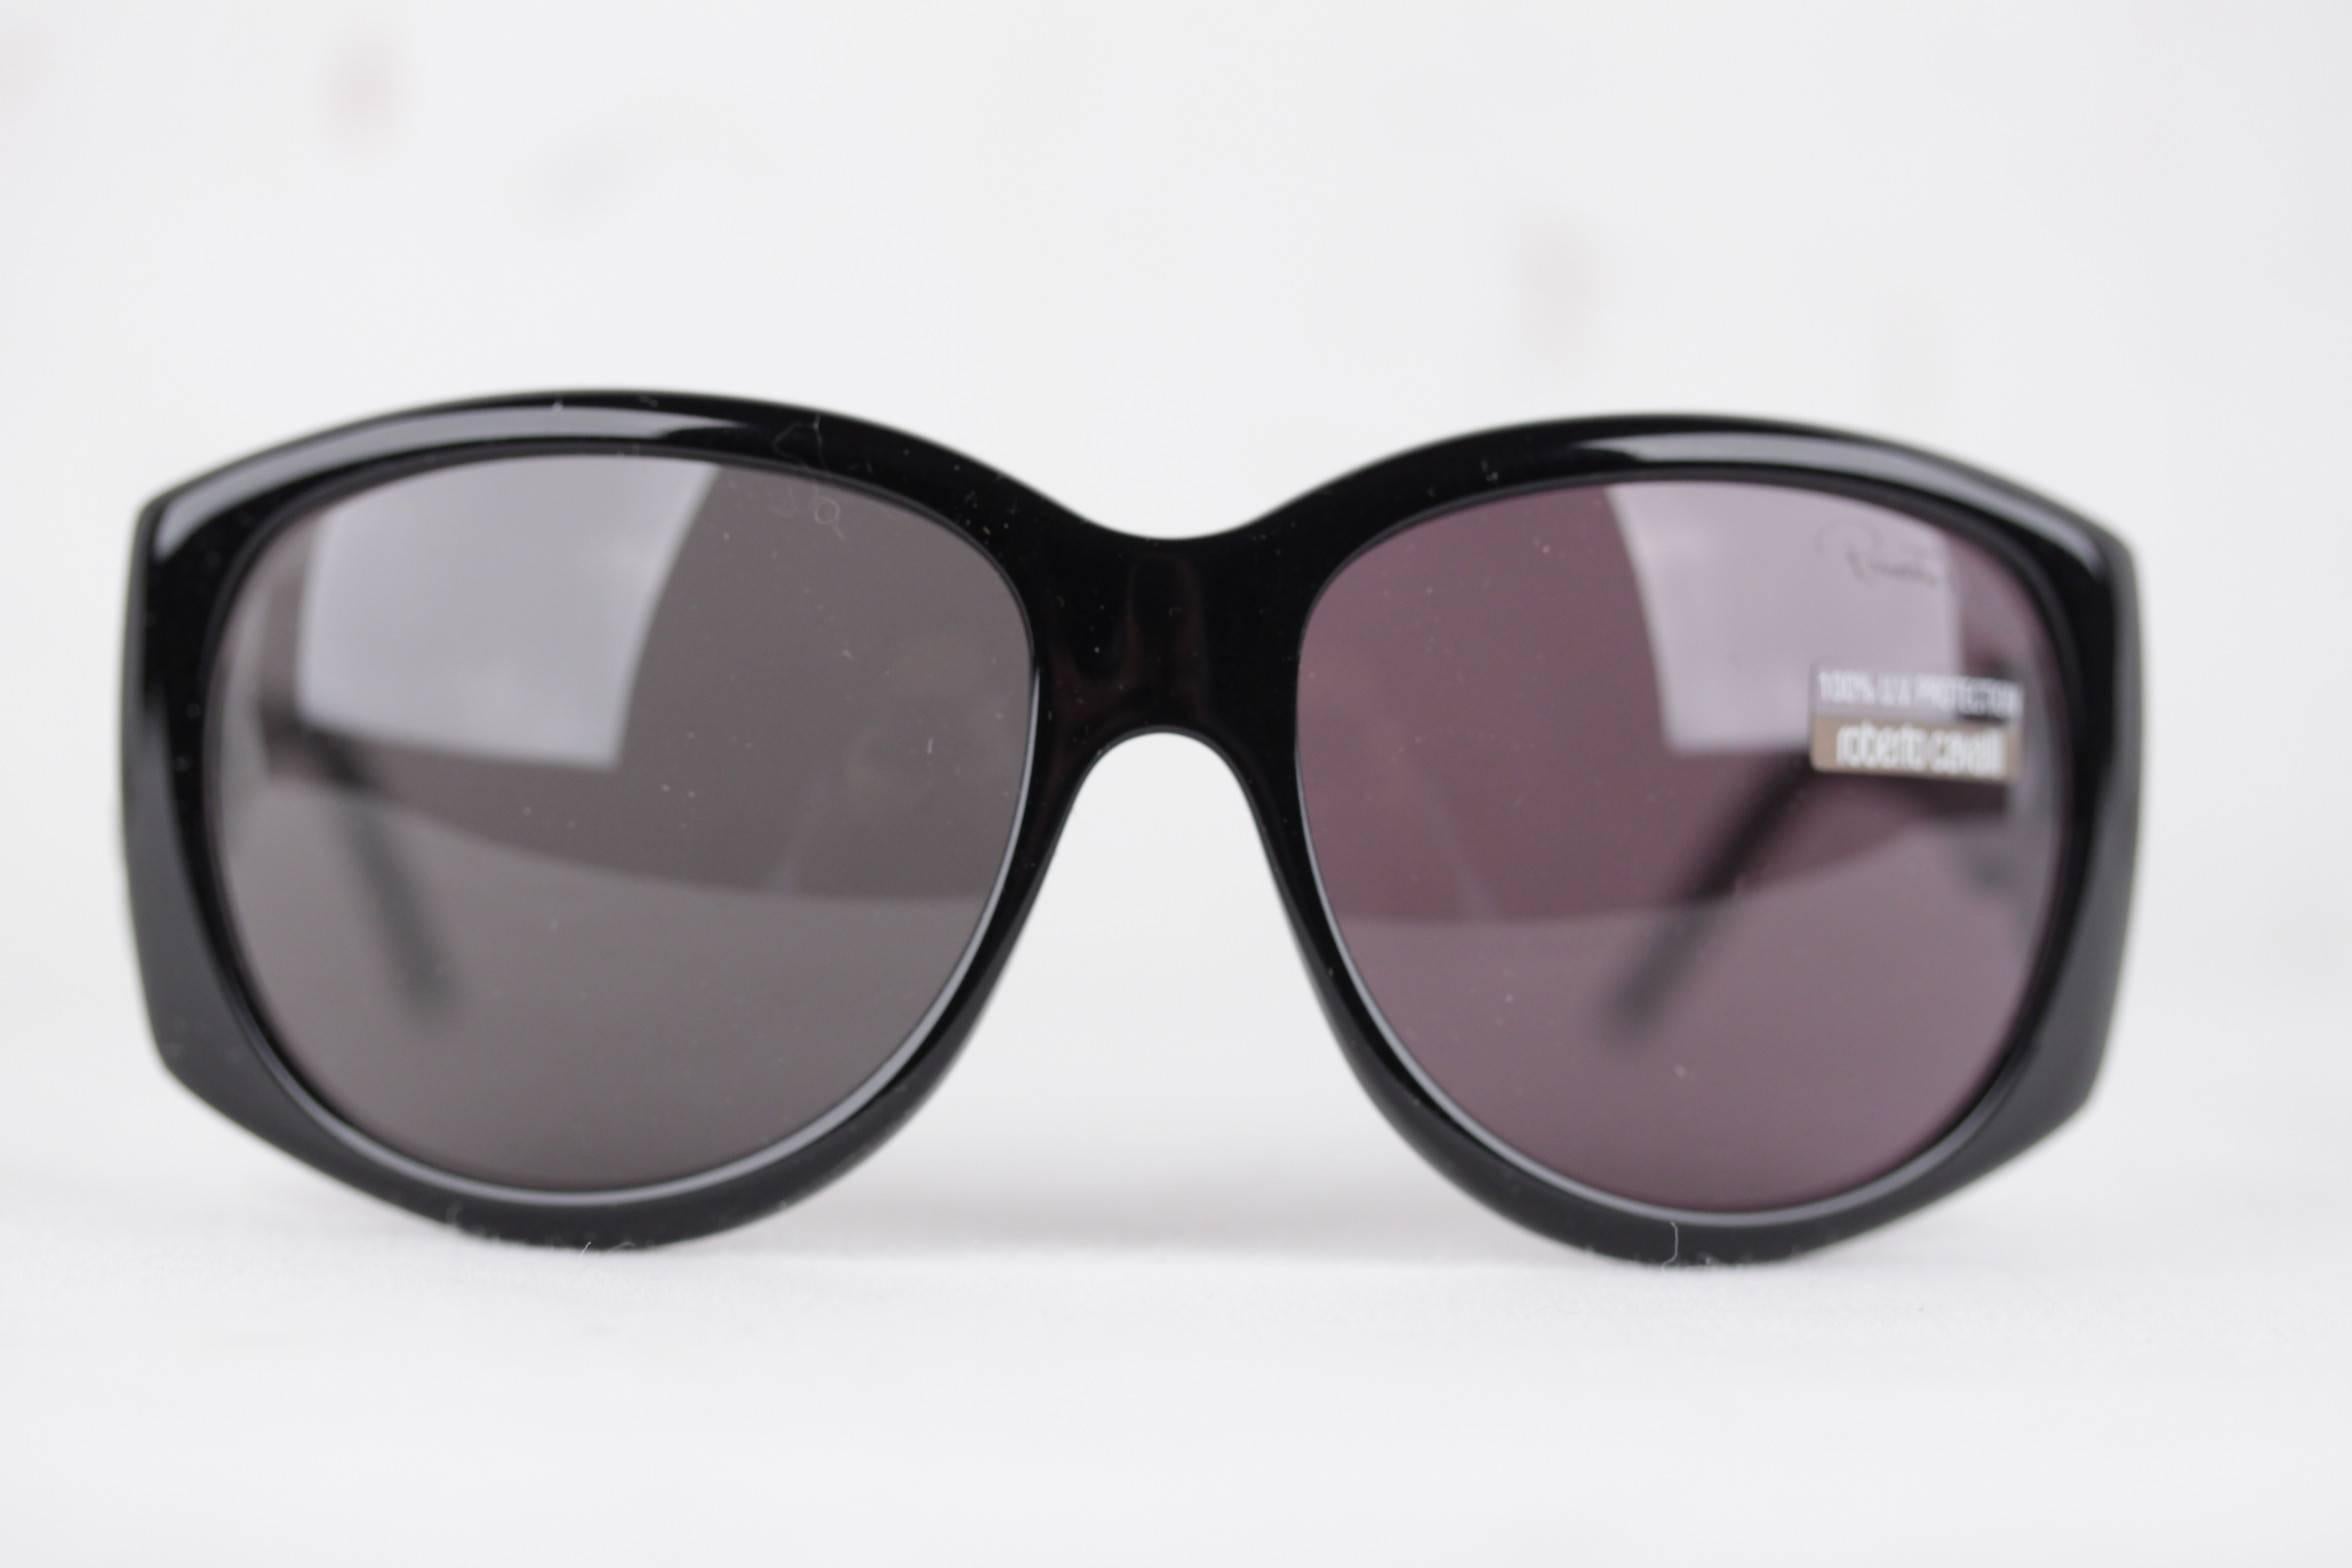 ROBERTO CAVALLI black/gray sunglasses mod. CARITE 288S B5 59/15 130 eyewear 2